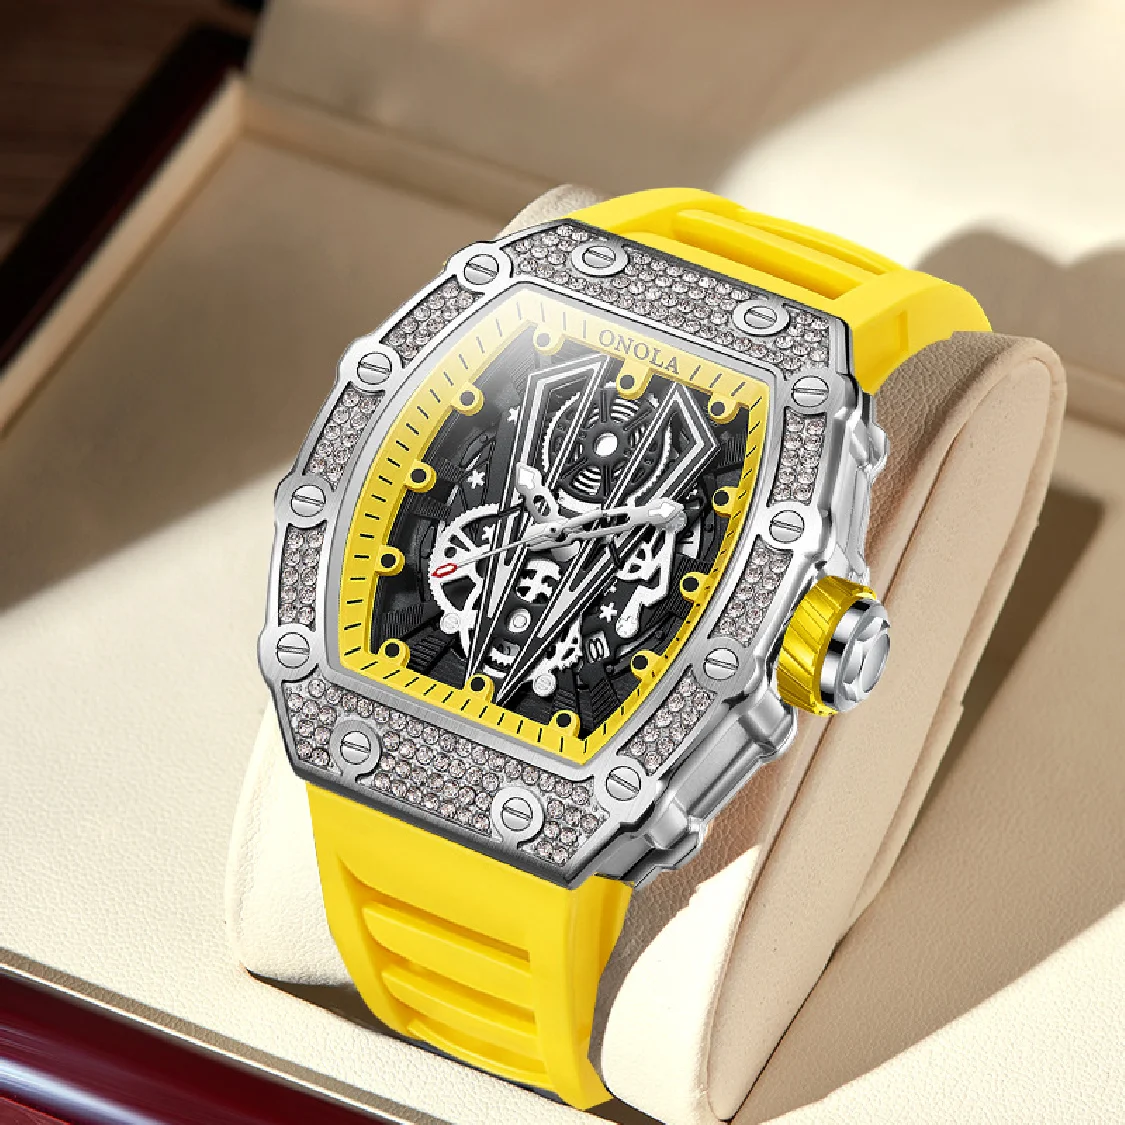 New Diamond Fashion Men Watch ONOLA  Top Luxury Man Watches Quartz Sports Waterproof Men's Wristwatch Clock Relogio Masculino enlarge